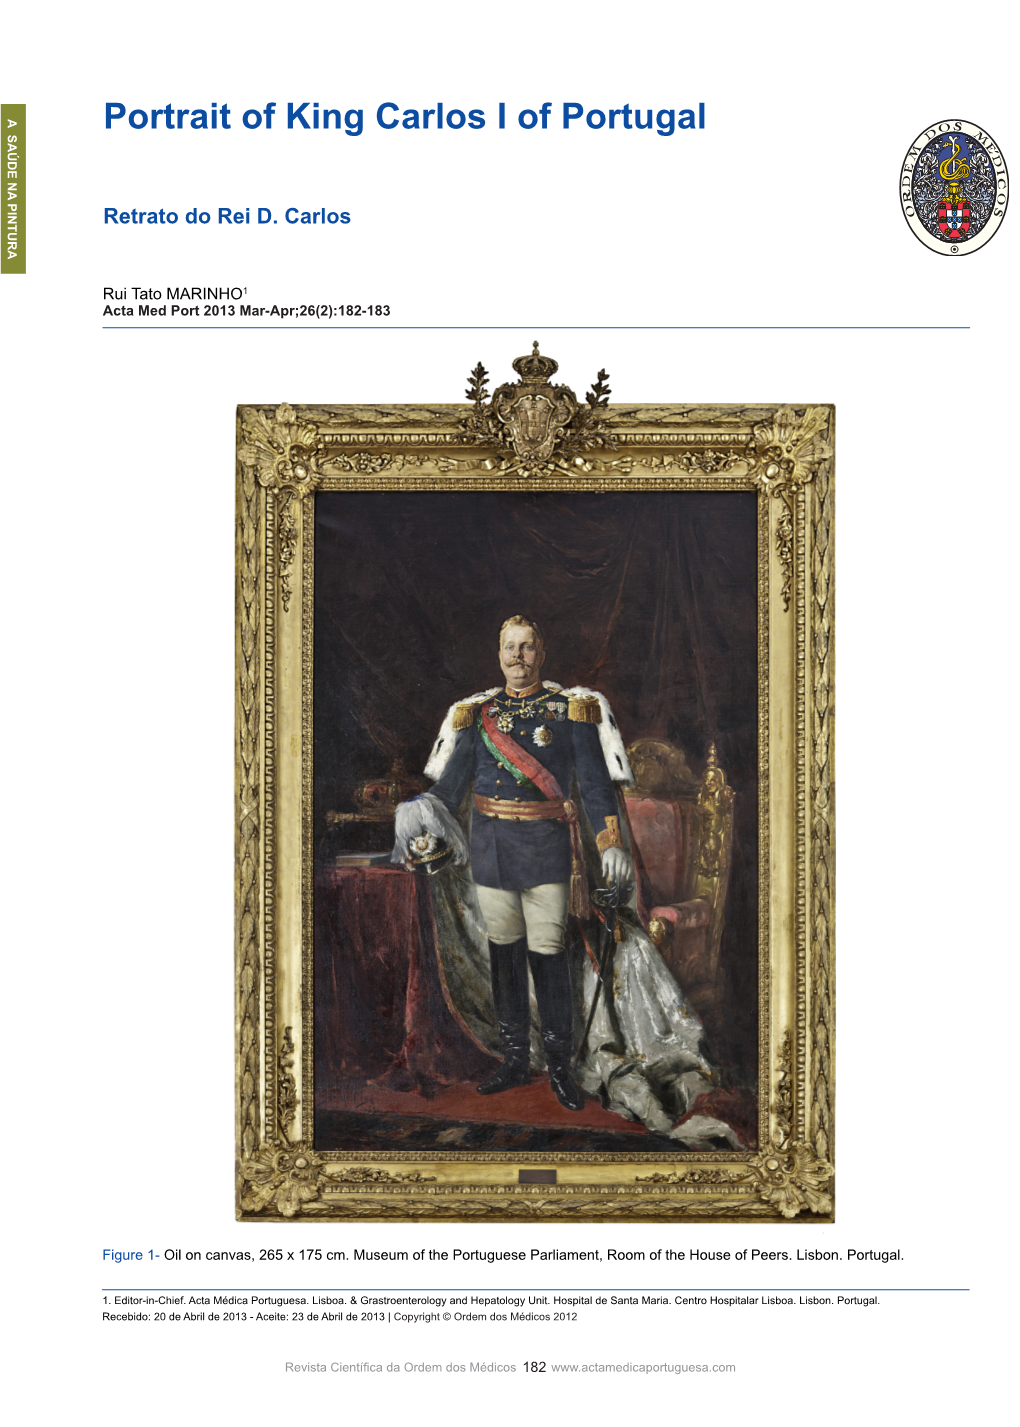 Portrait of King Carlos I of Portugal